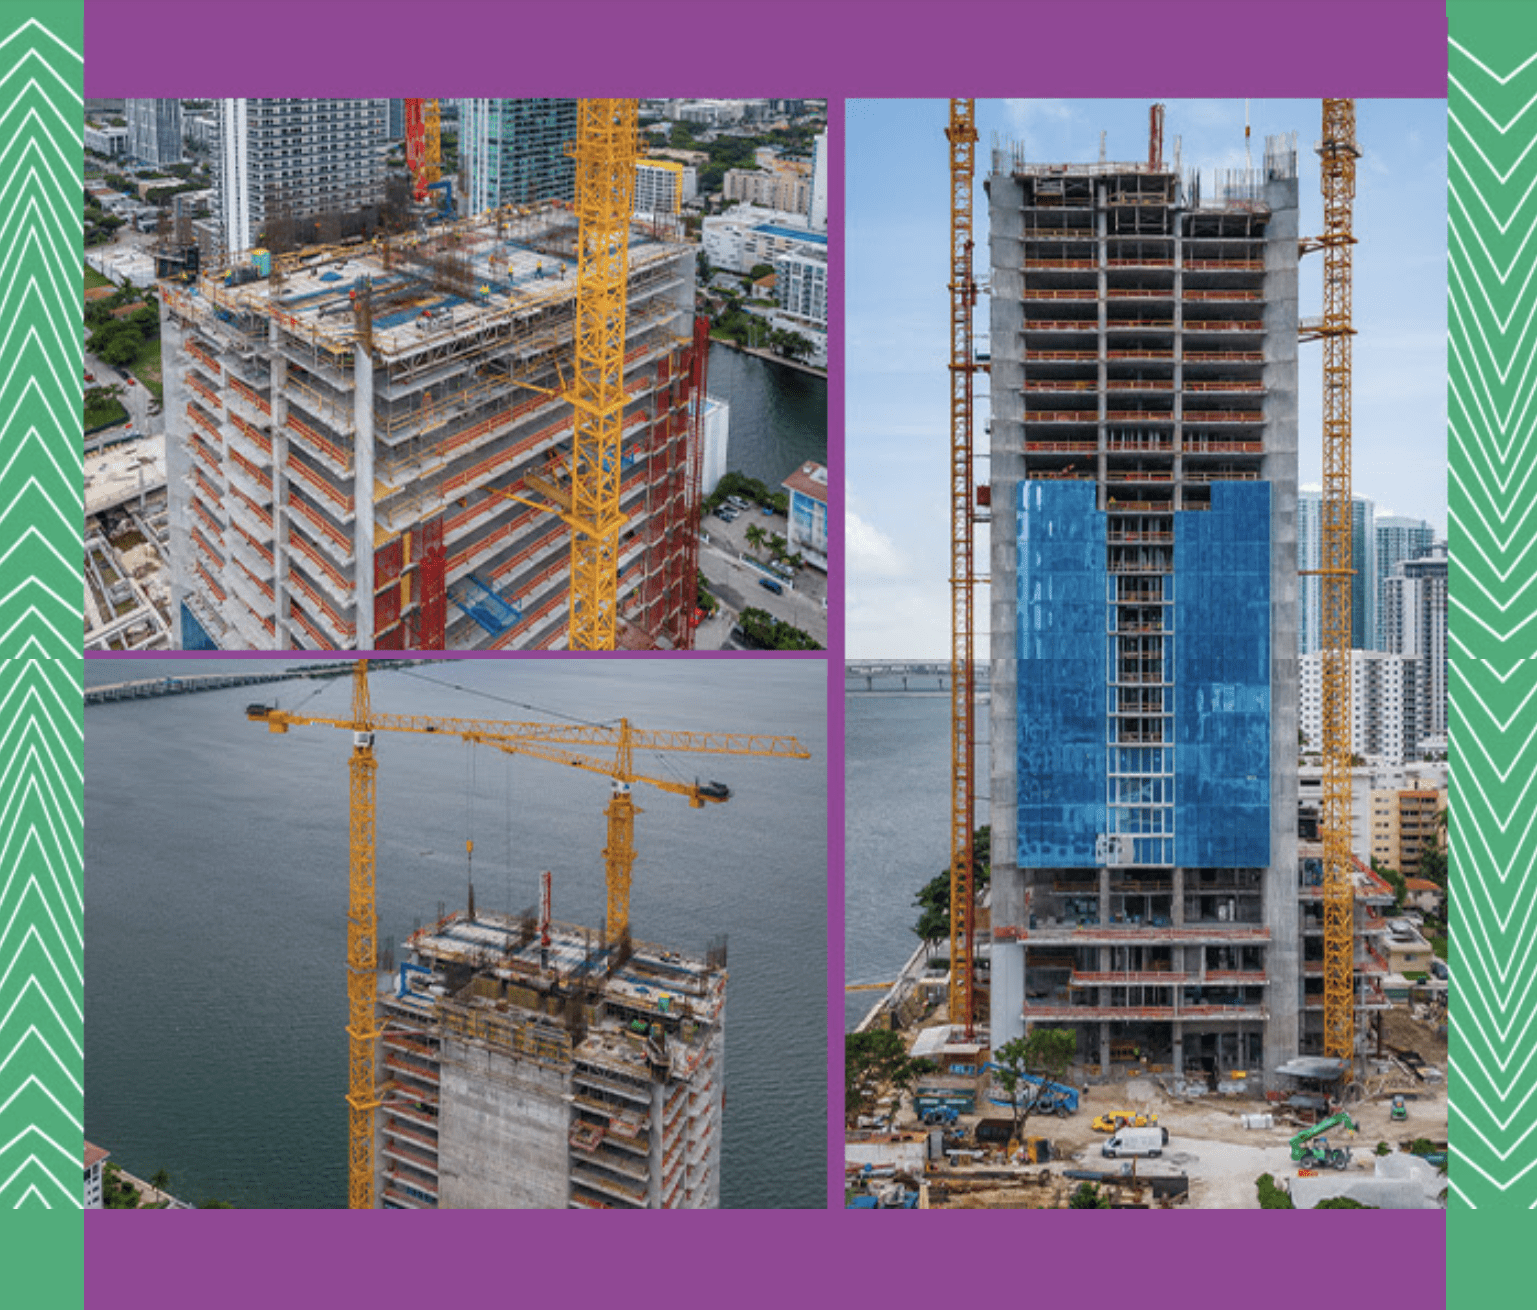 Missoni Baia Miami Reaches 35th Floor December 10th Miami Luxury Real Estate 1 855 756 4264